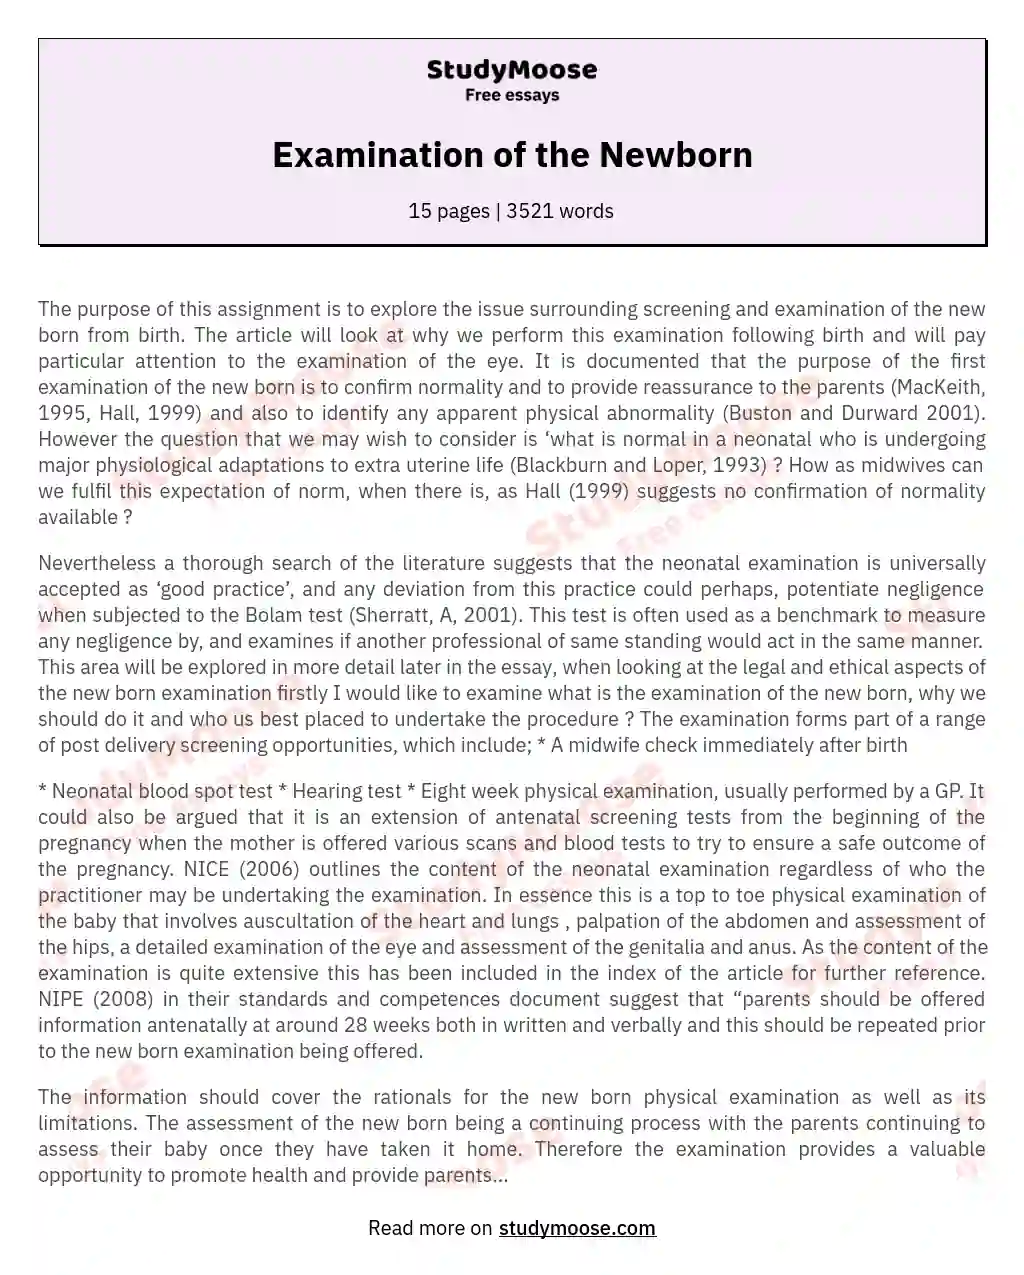 Examination of the Newborn essay